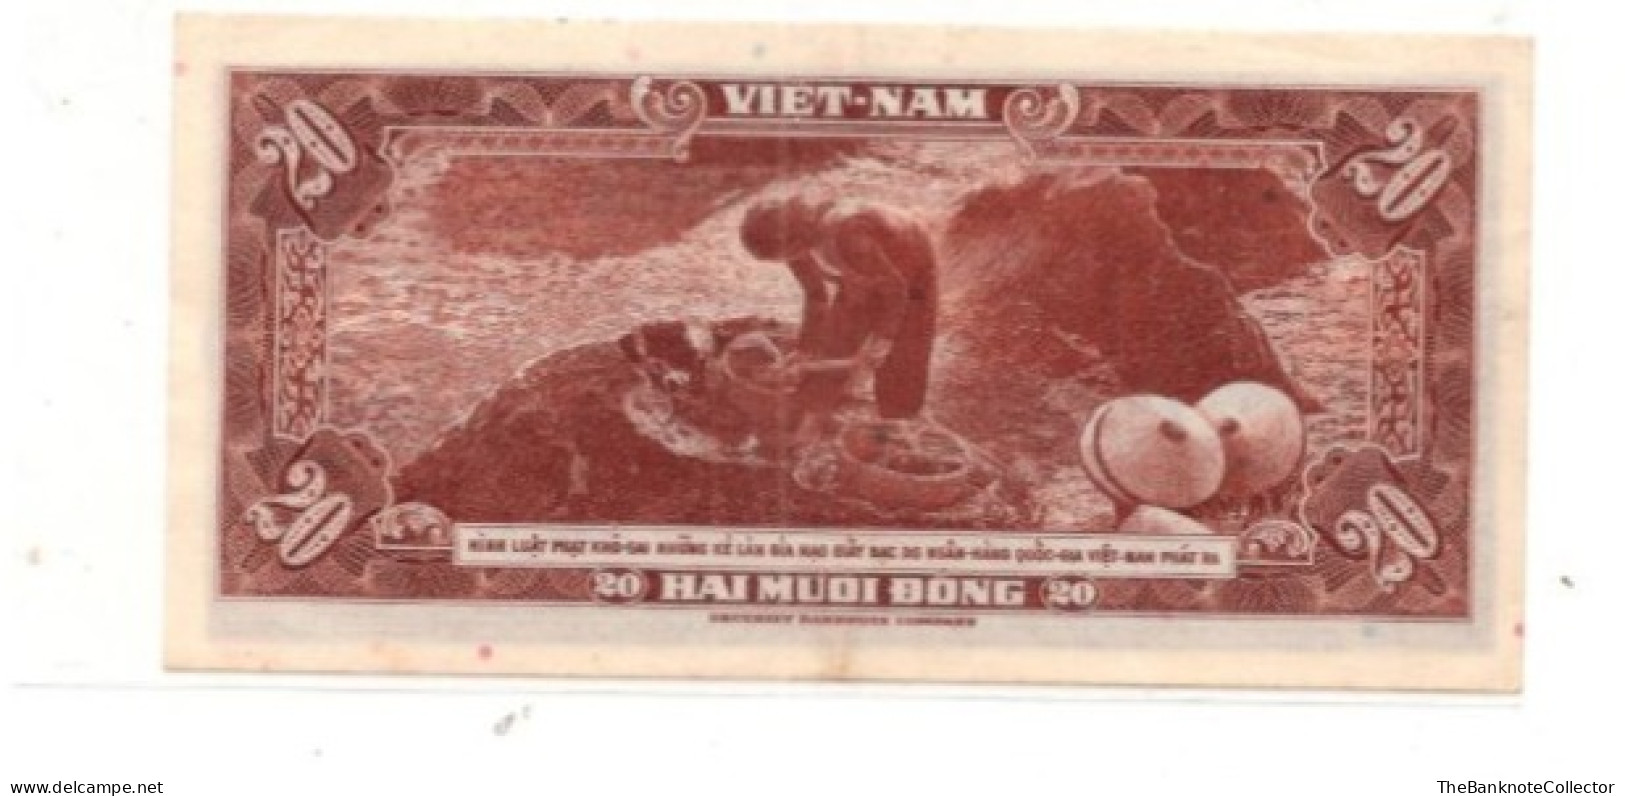 South Vietnam 20 Dong ND 1966 P-6  AUNC - Vietnam